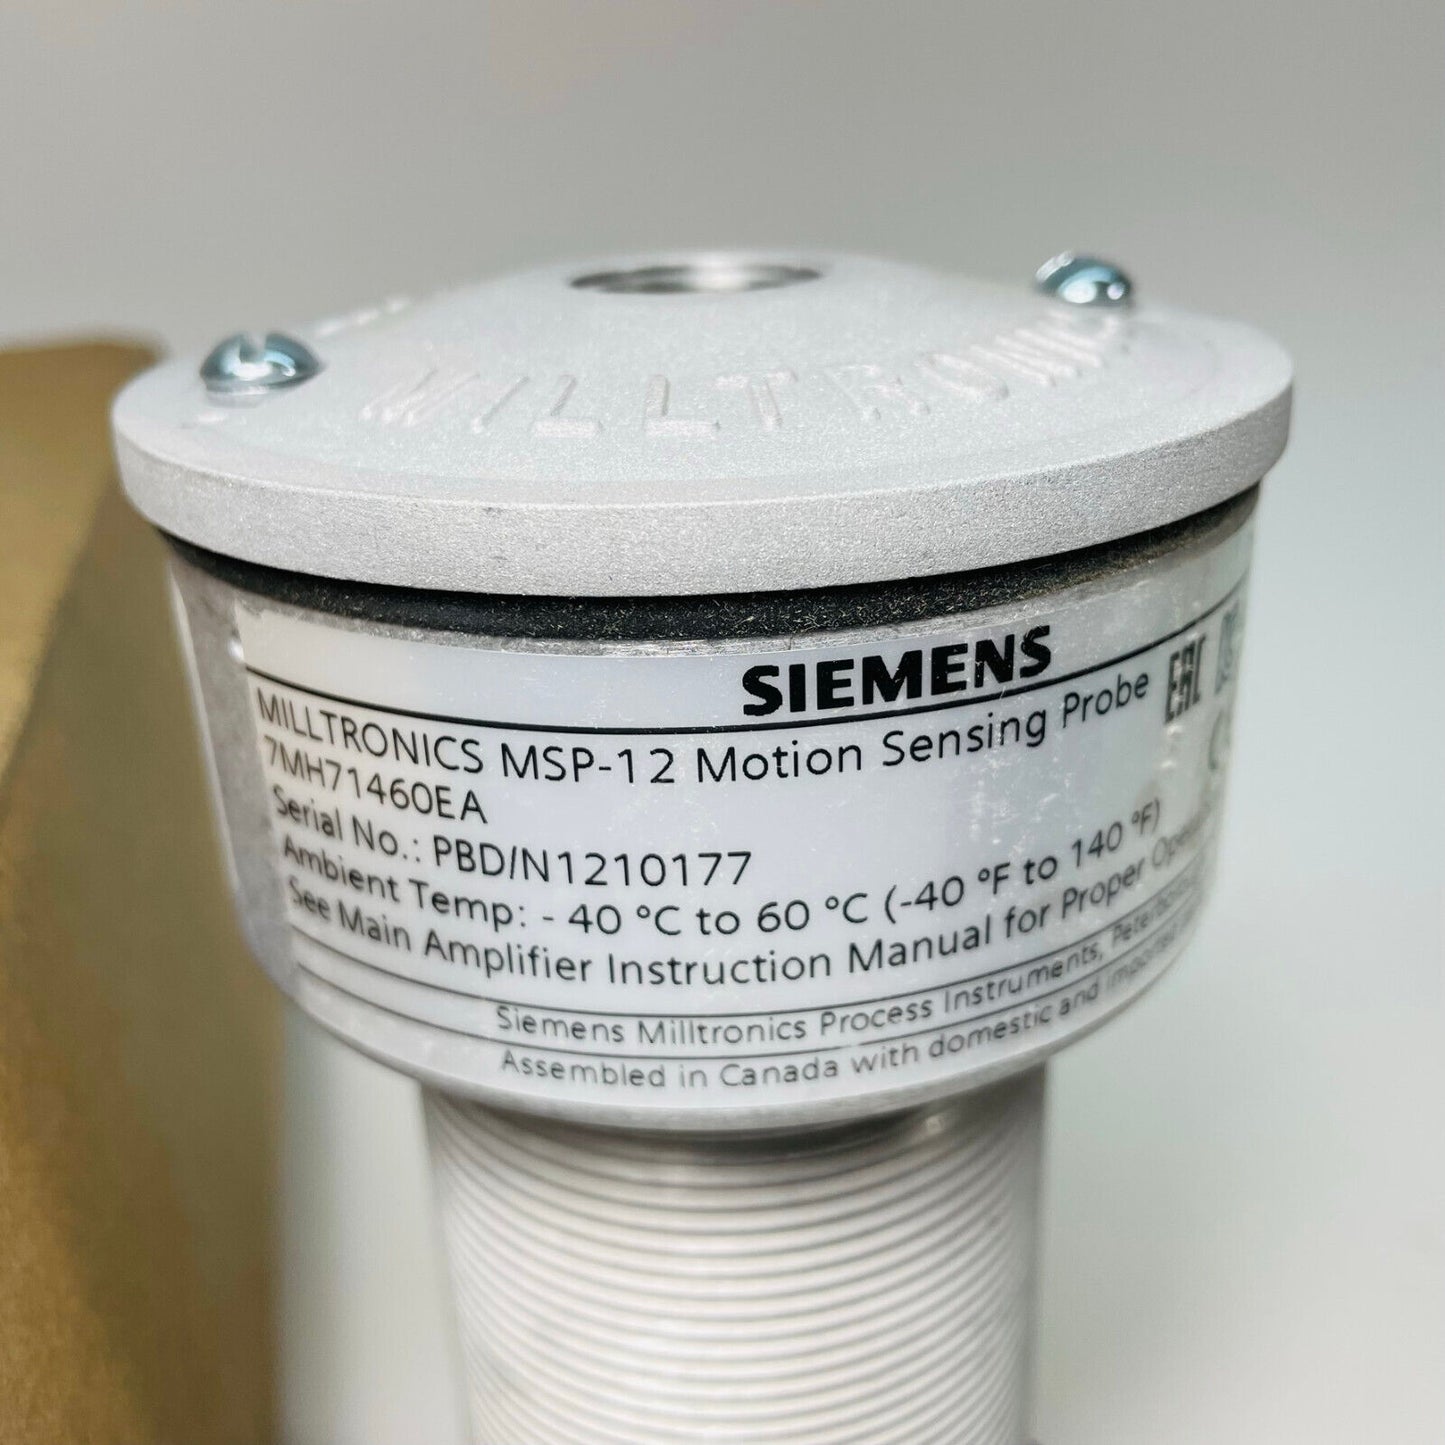 New Siemens 7MH71460EA MSP-12 Motion Sensing Probe